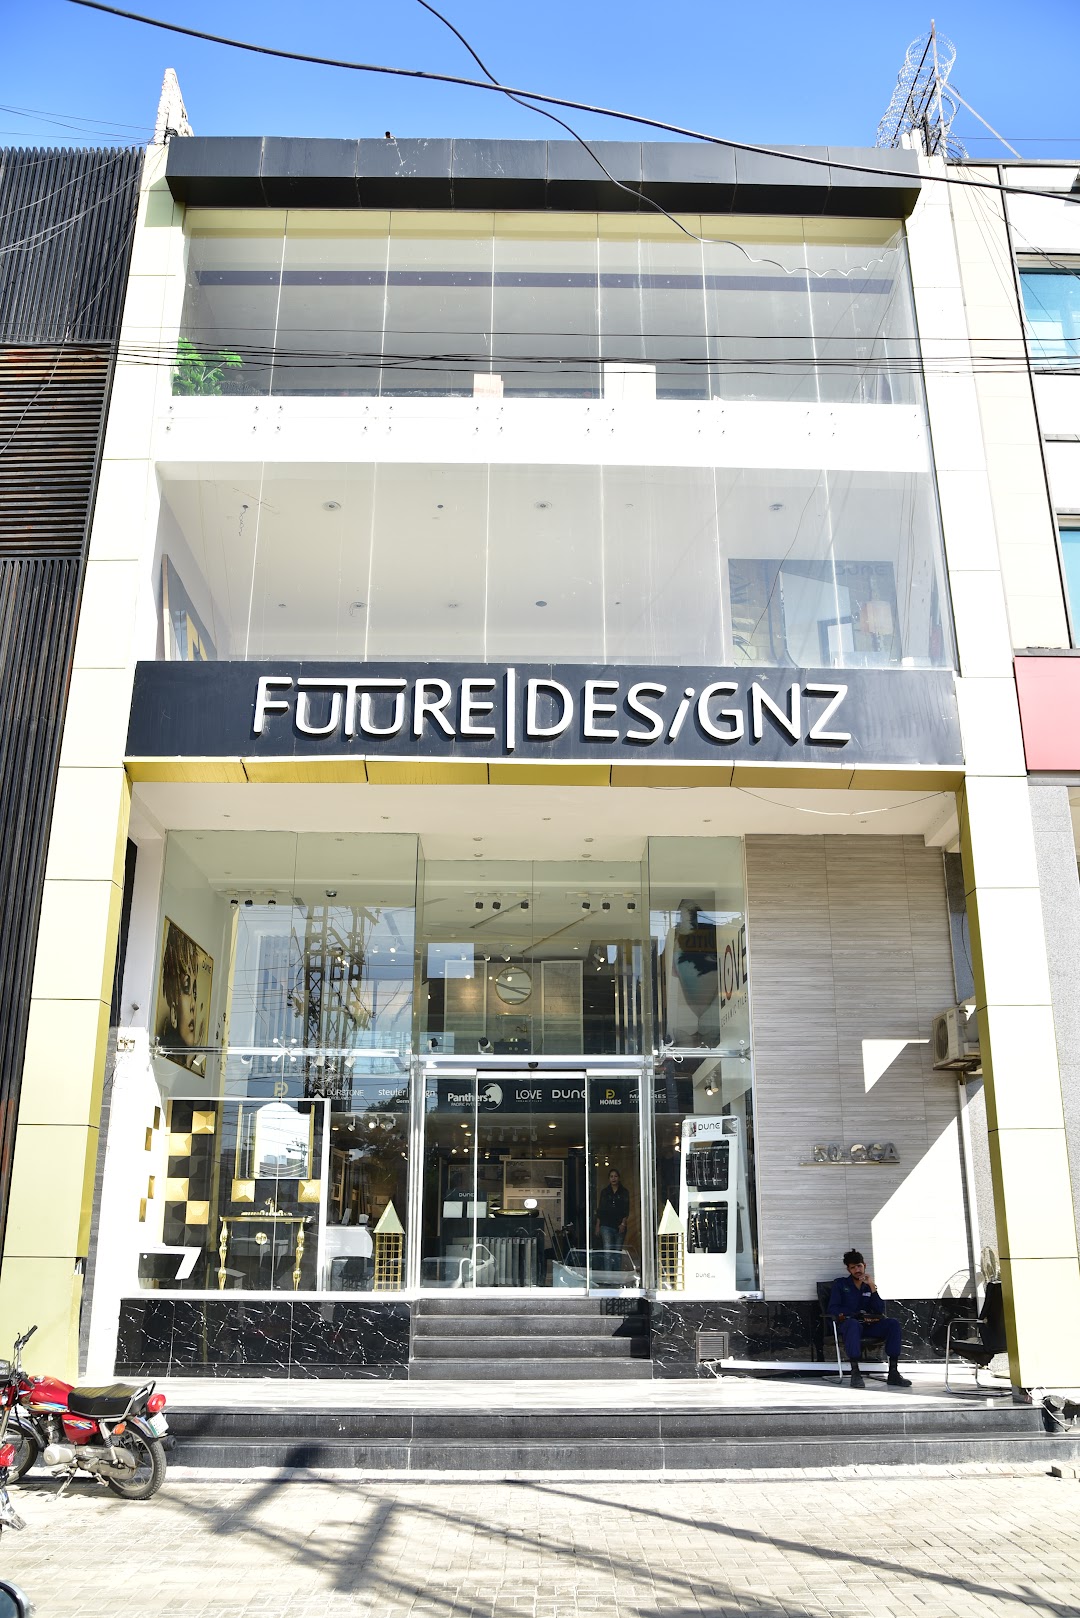 Future Designz (Tiles for Life)